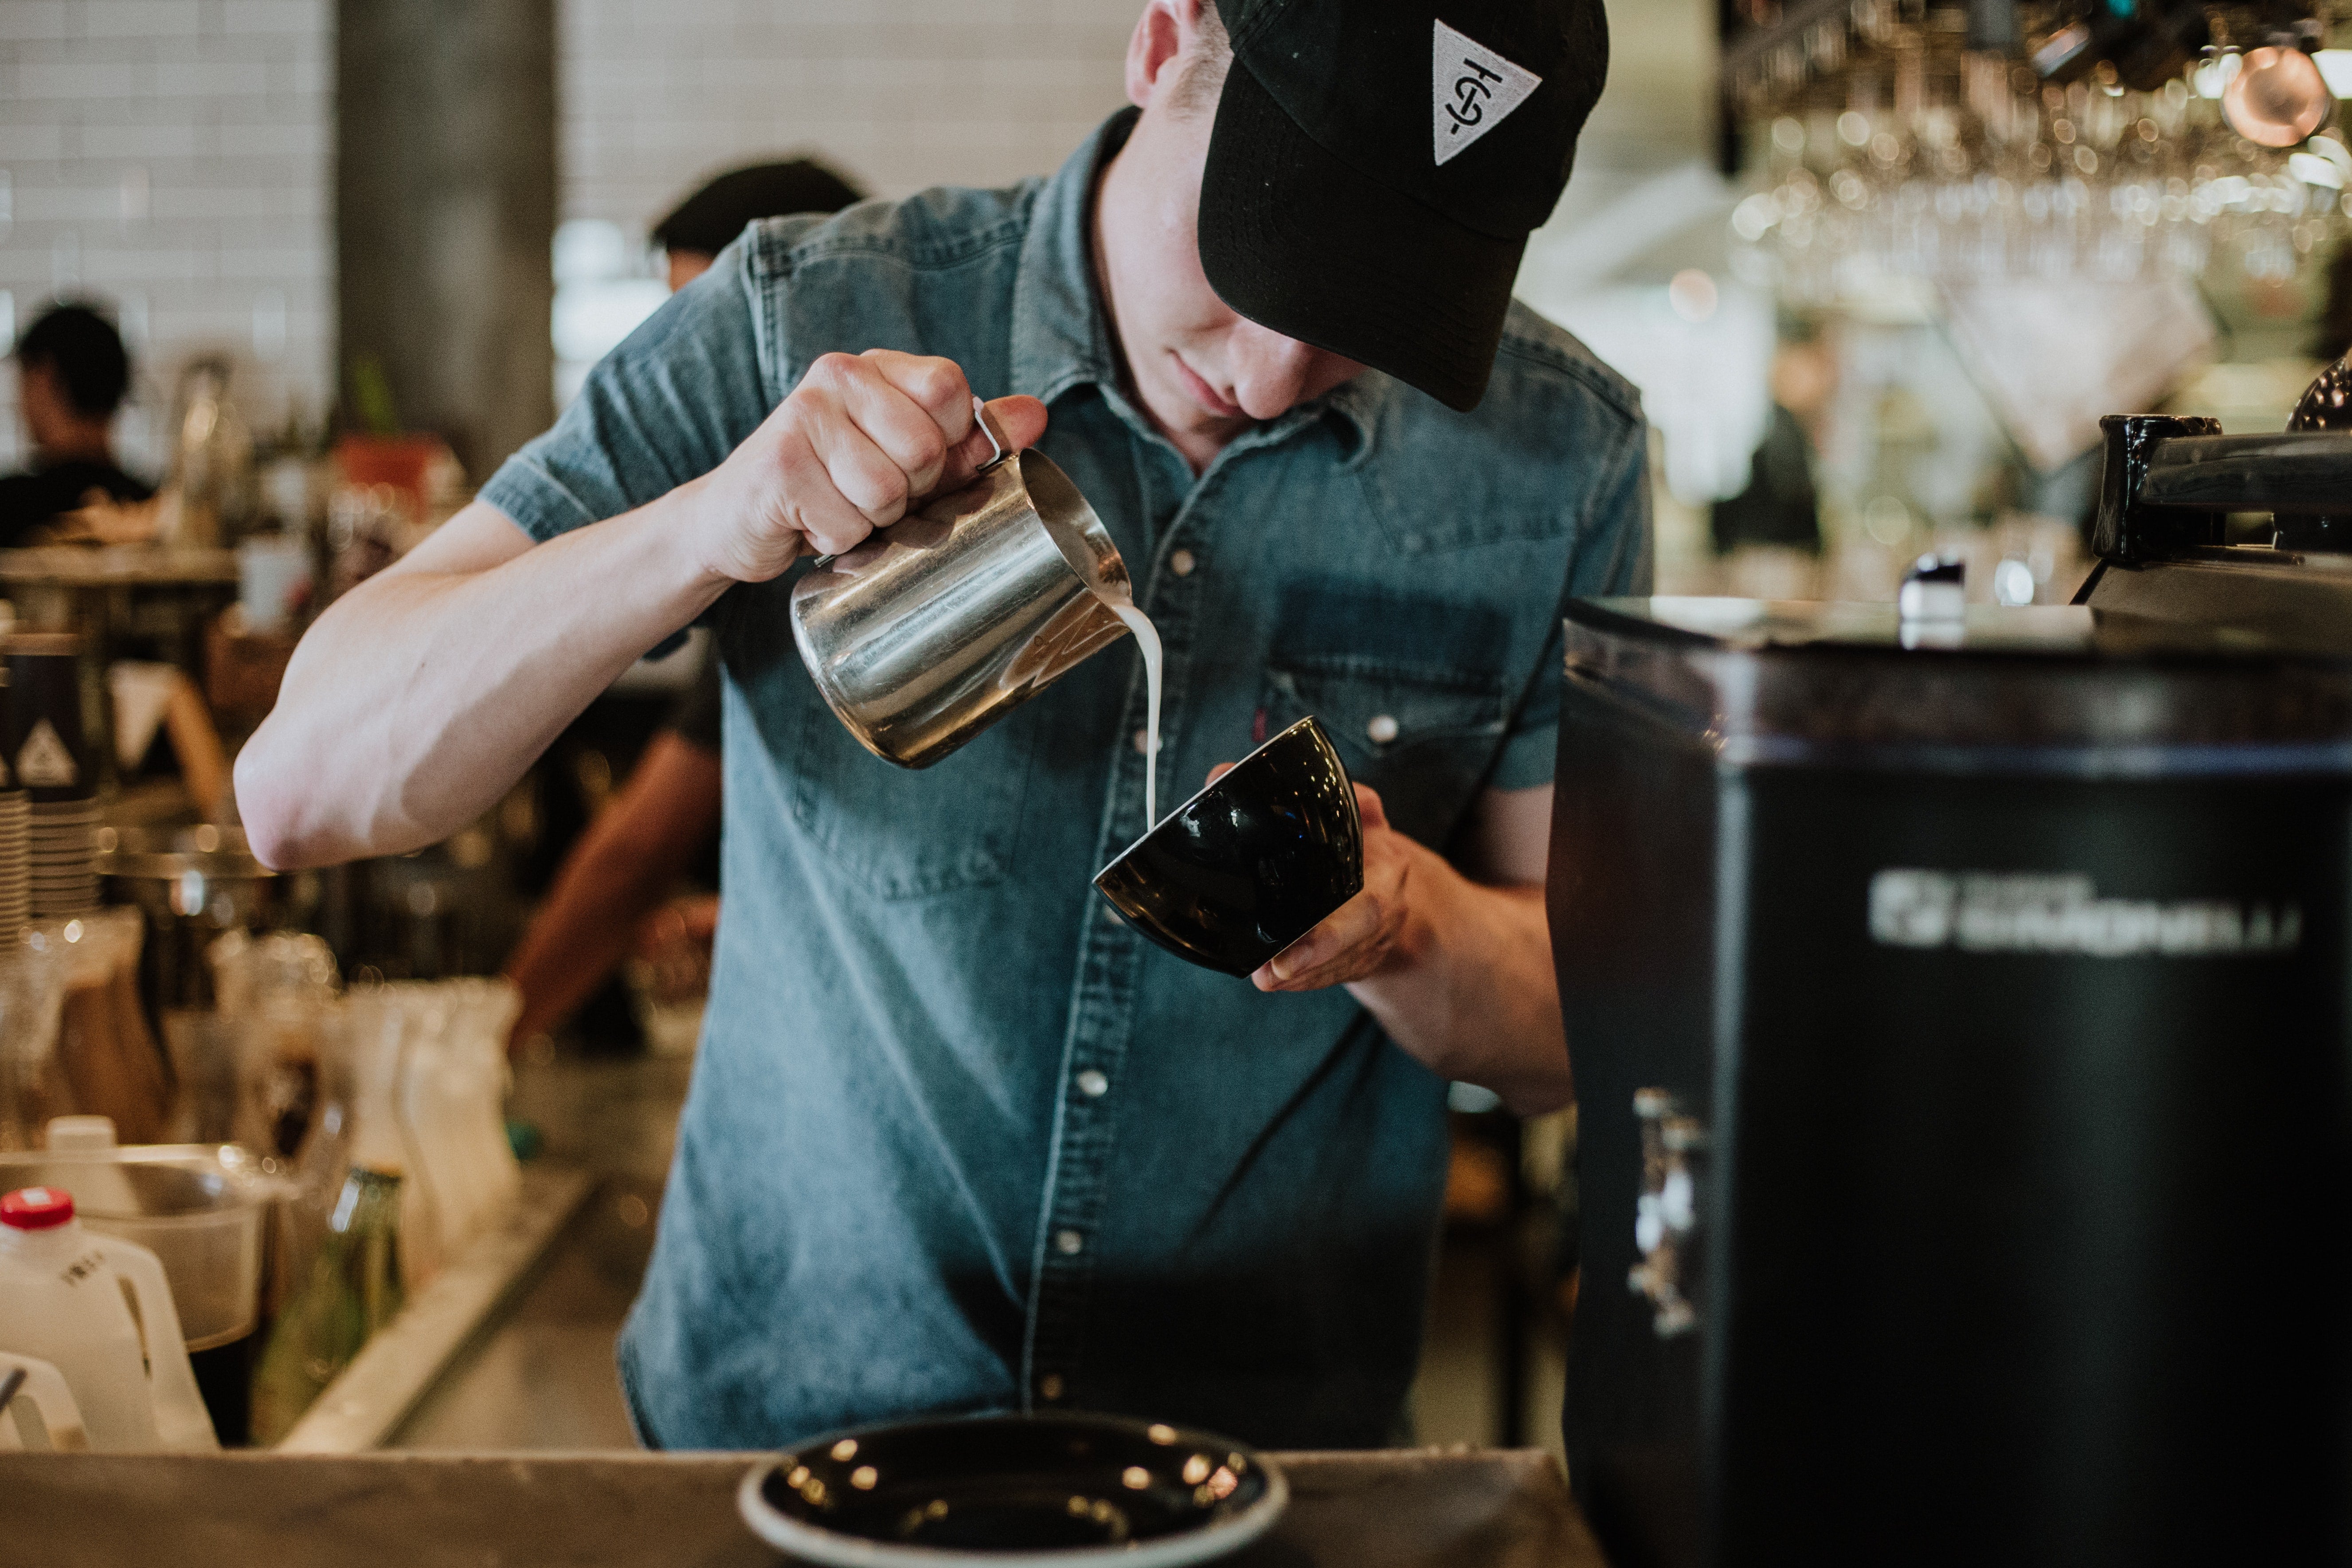 Learn how to make coffee like a barista